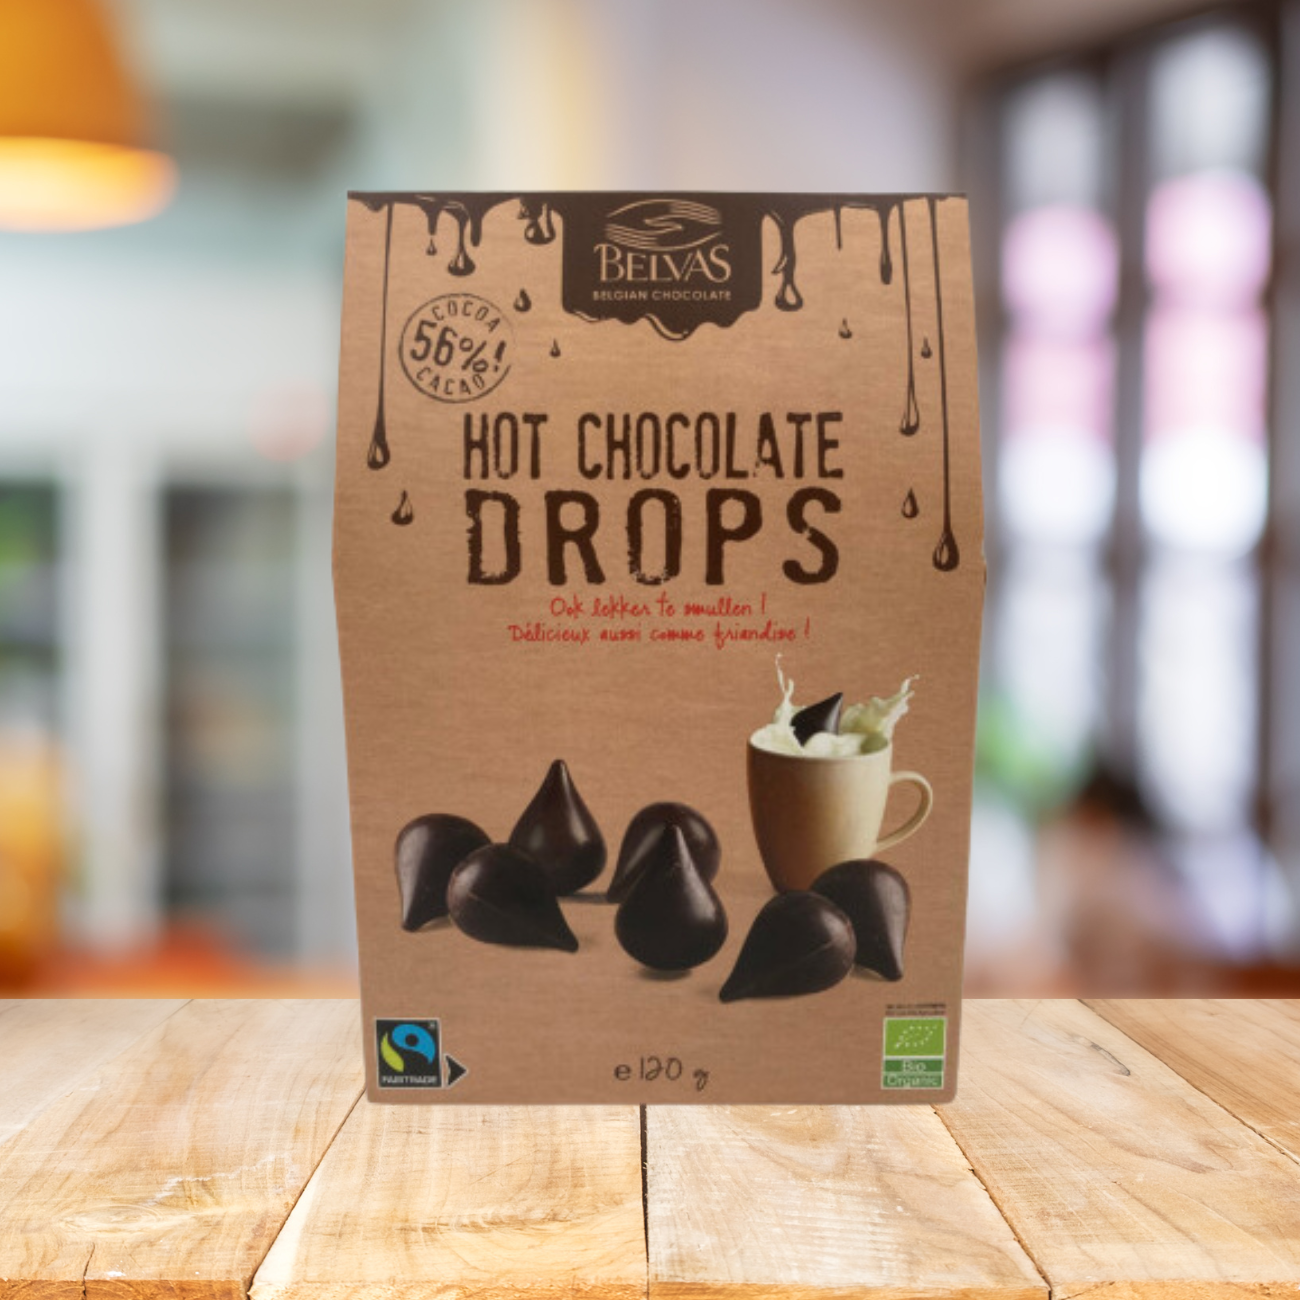 Hot Chocolate Drops 72% Cocoa Chocolate 120g